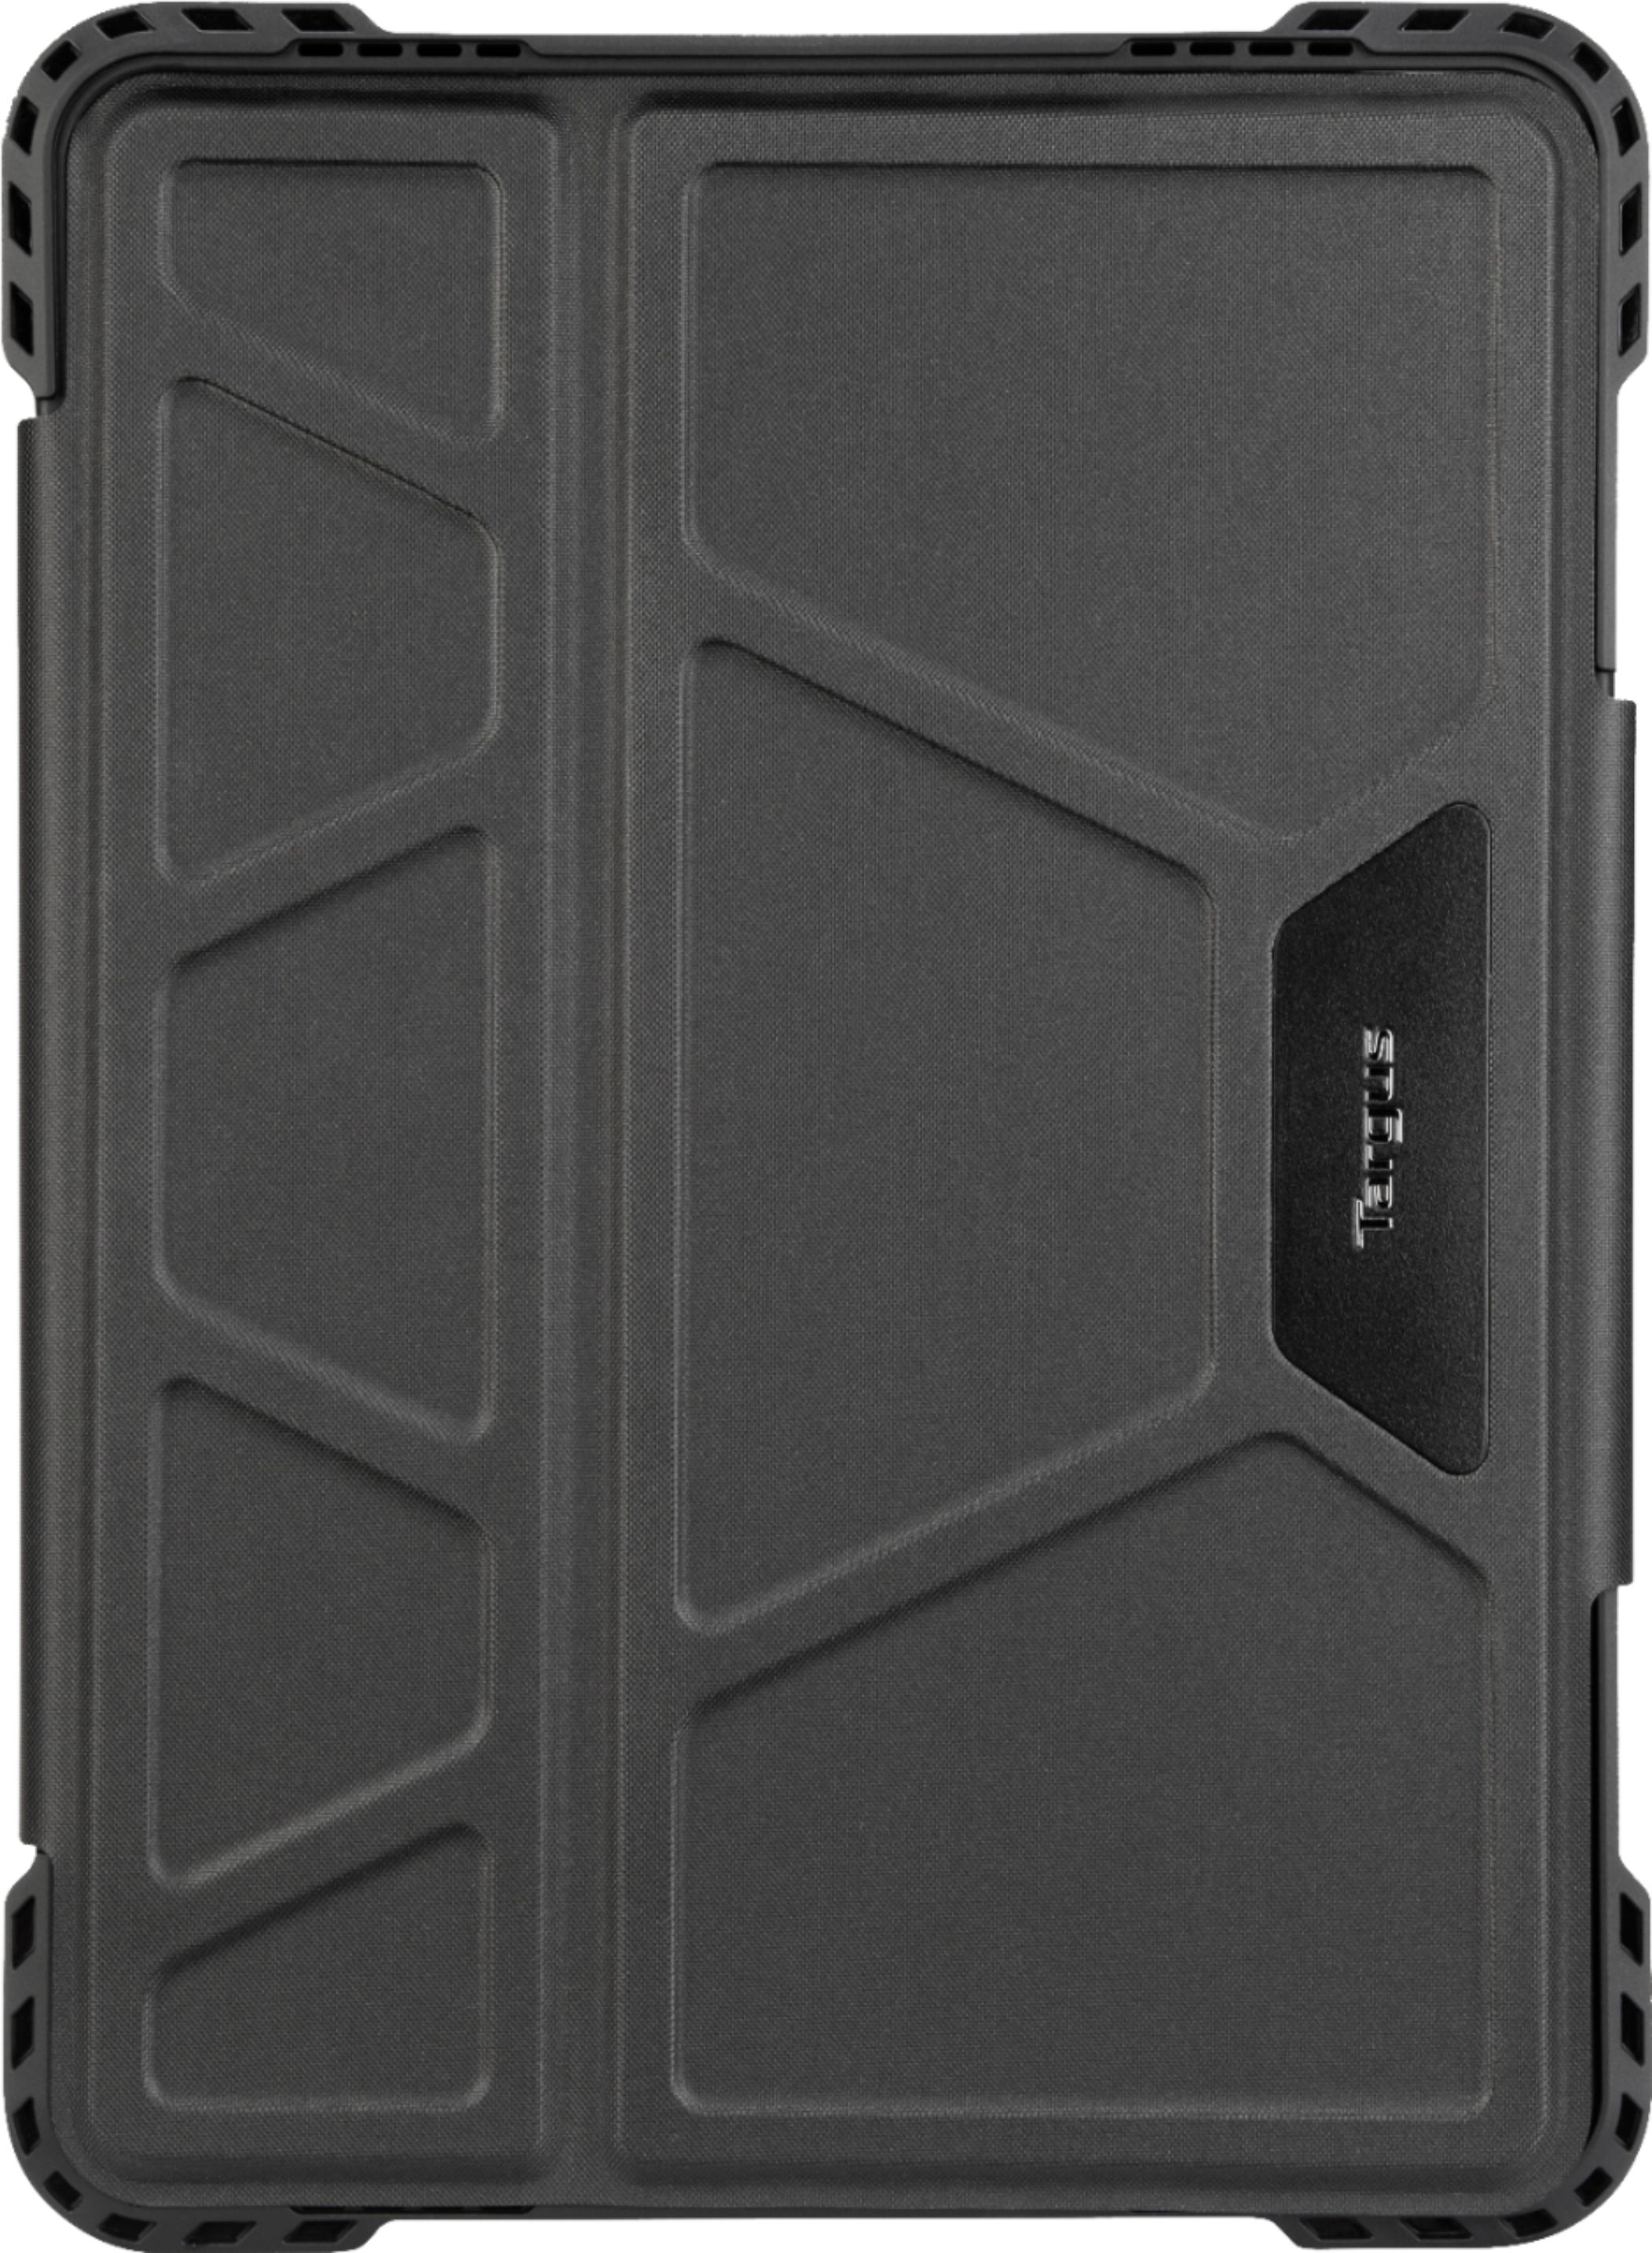 cool ipad air cases